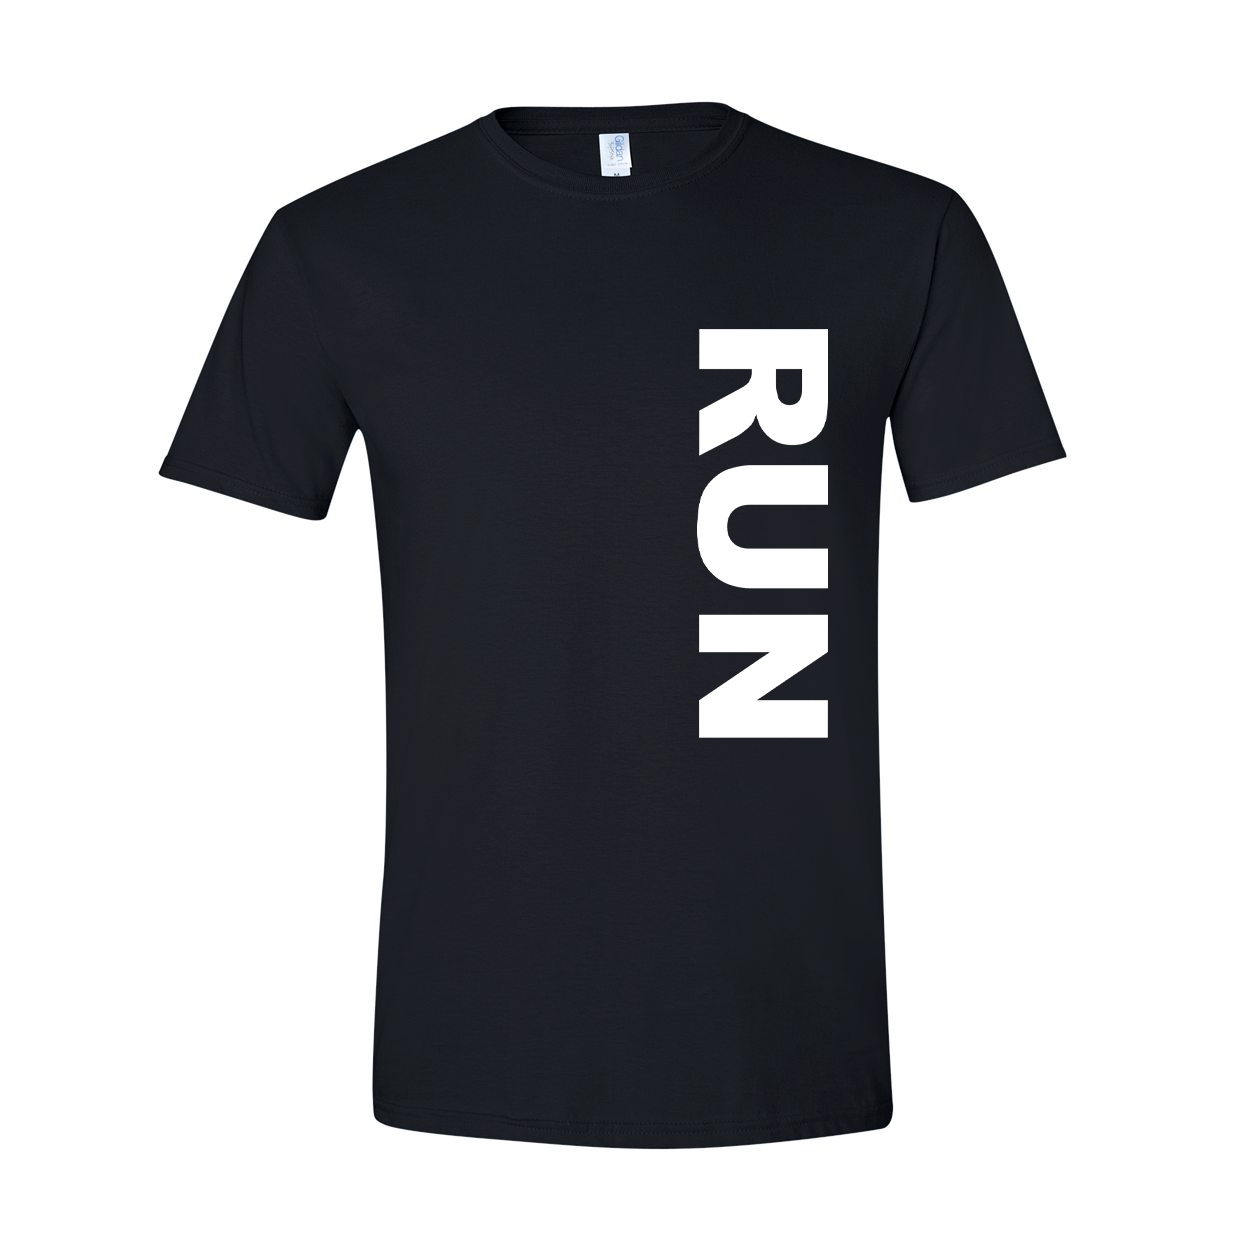 Run Brand Logo Classic Vertical T-Shirt Black (White Logo)